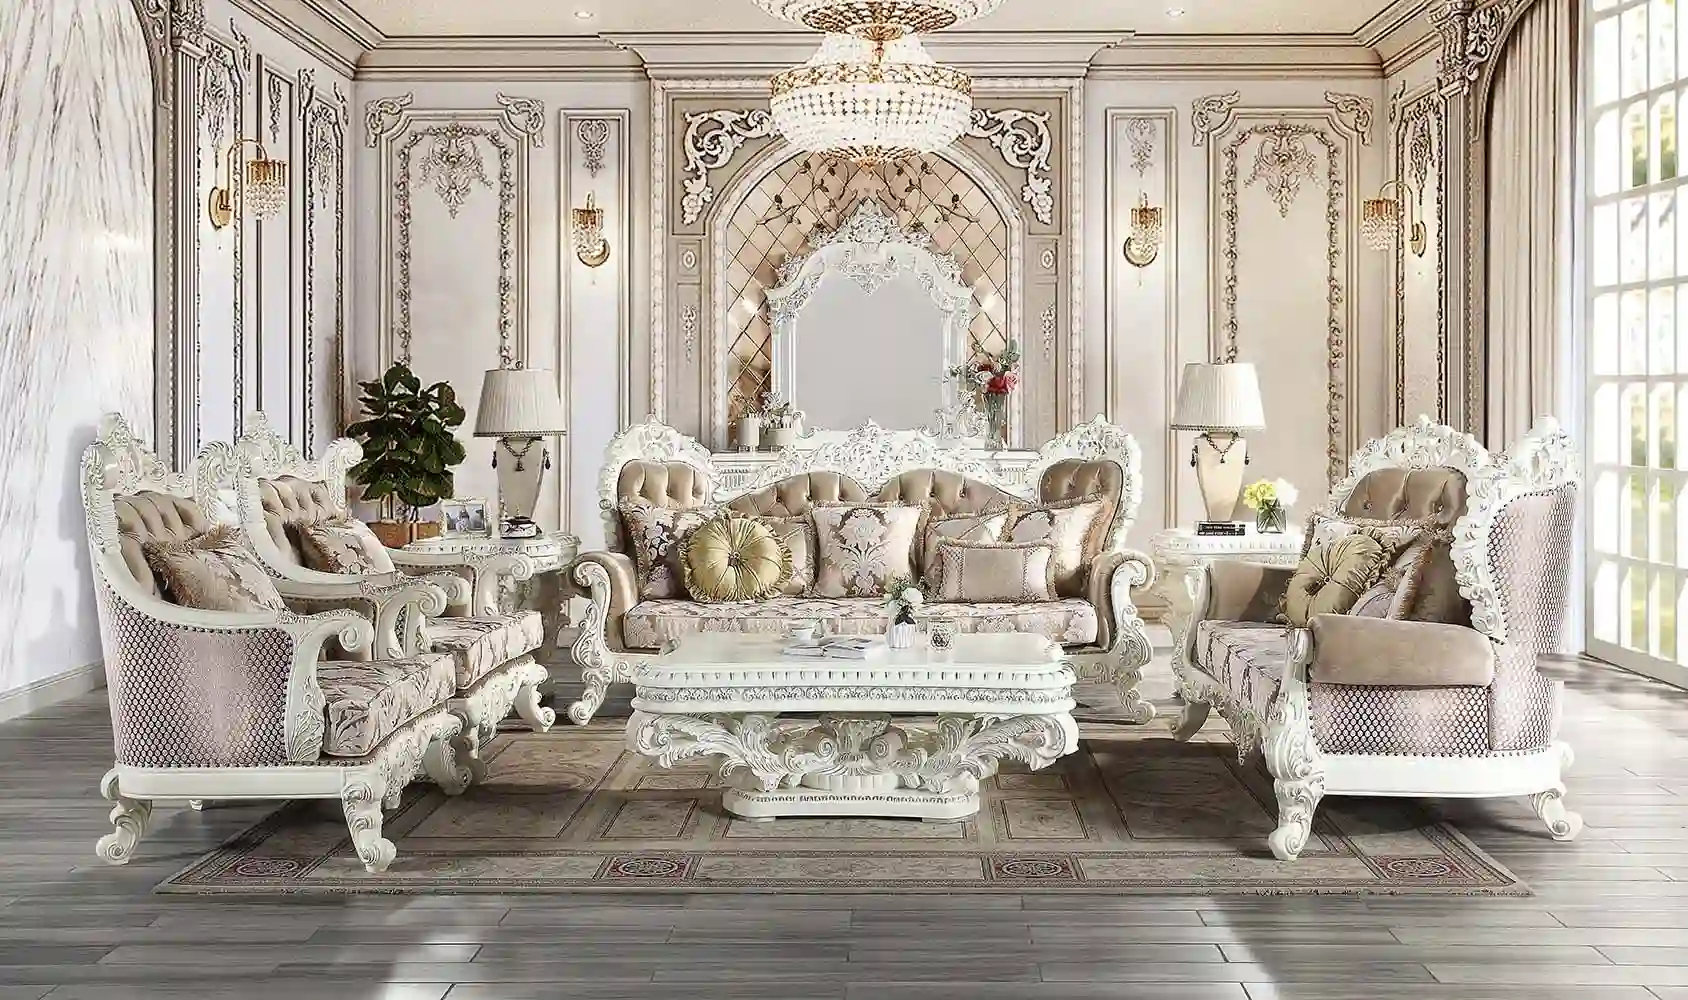 ACME's Luxurious Furniture Designs